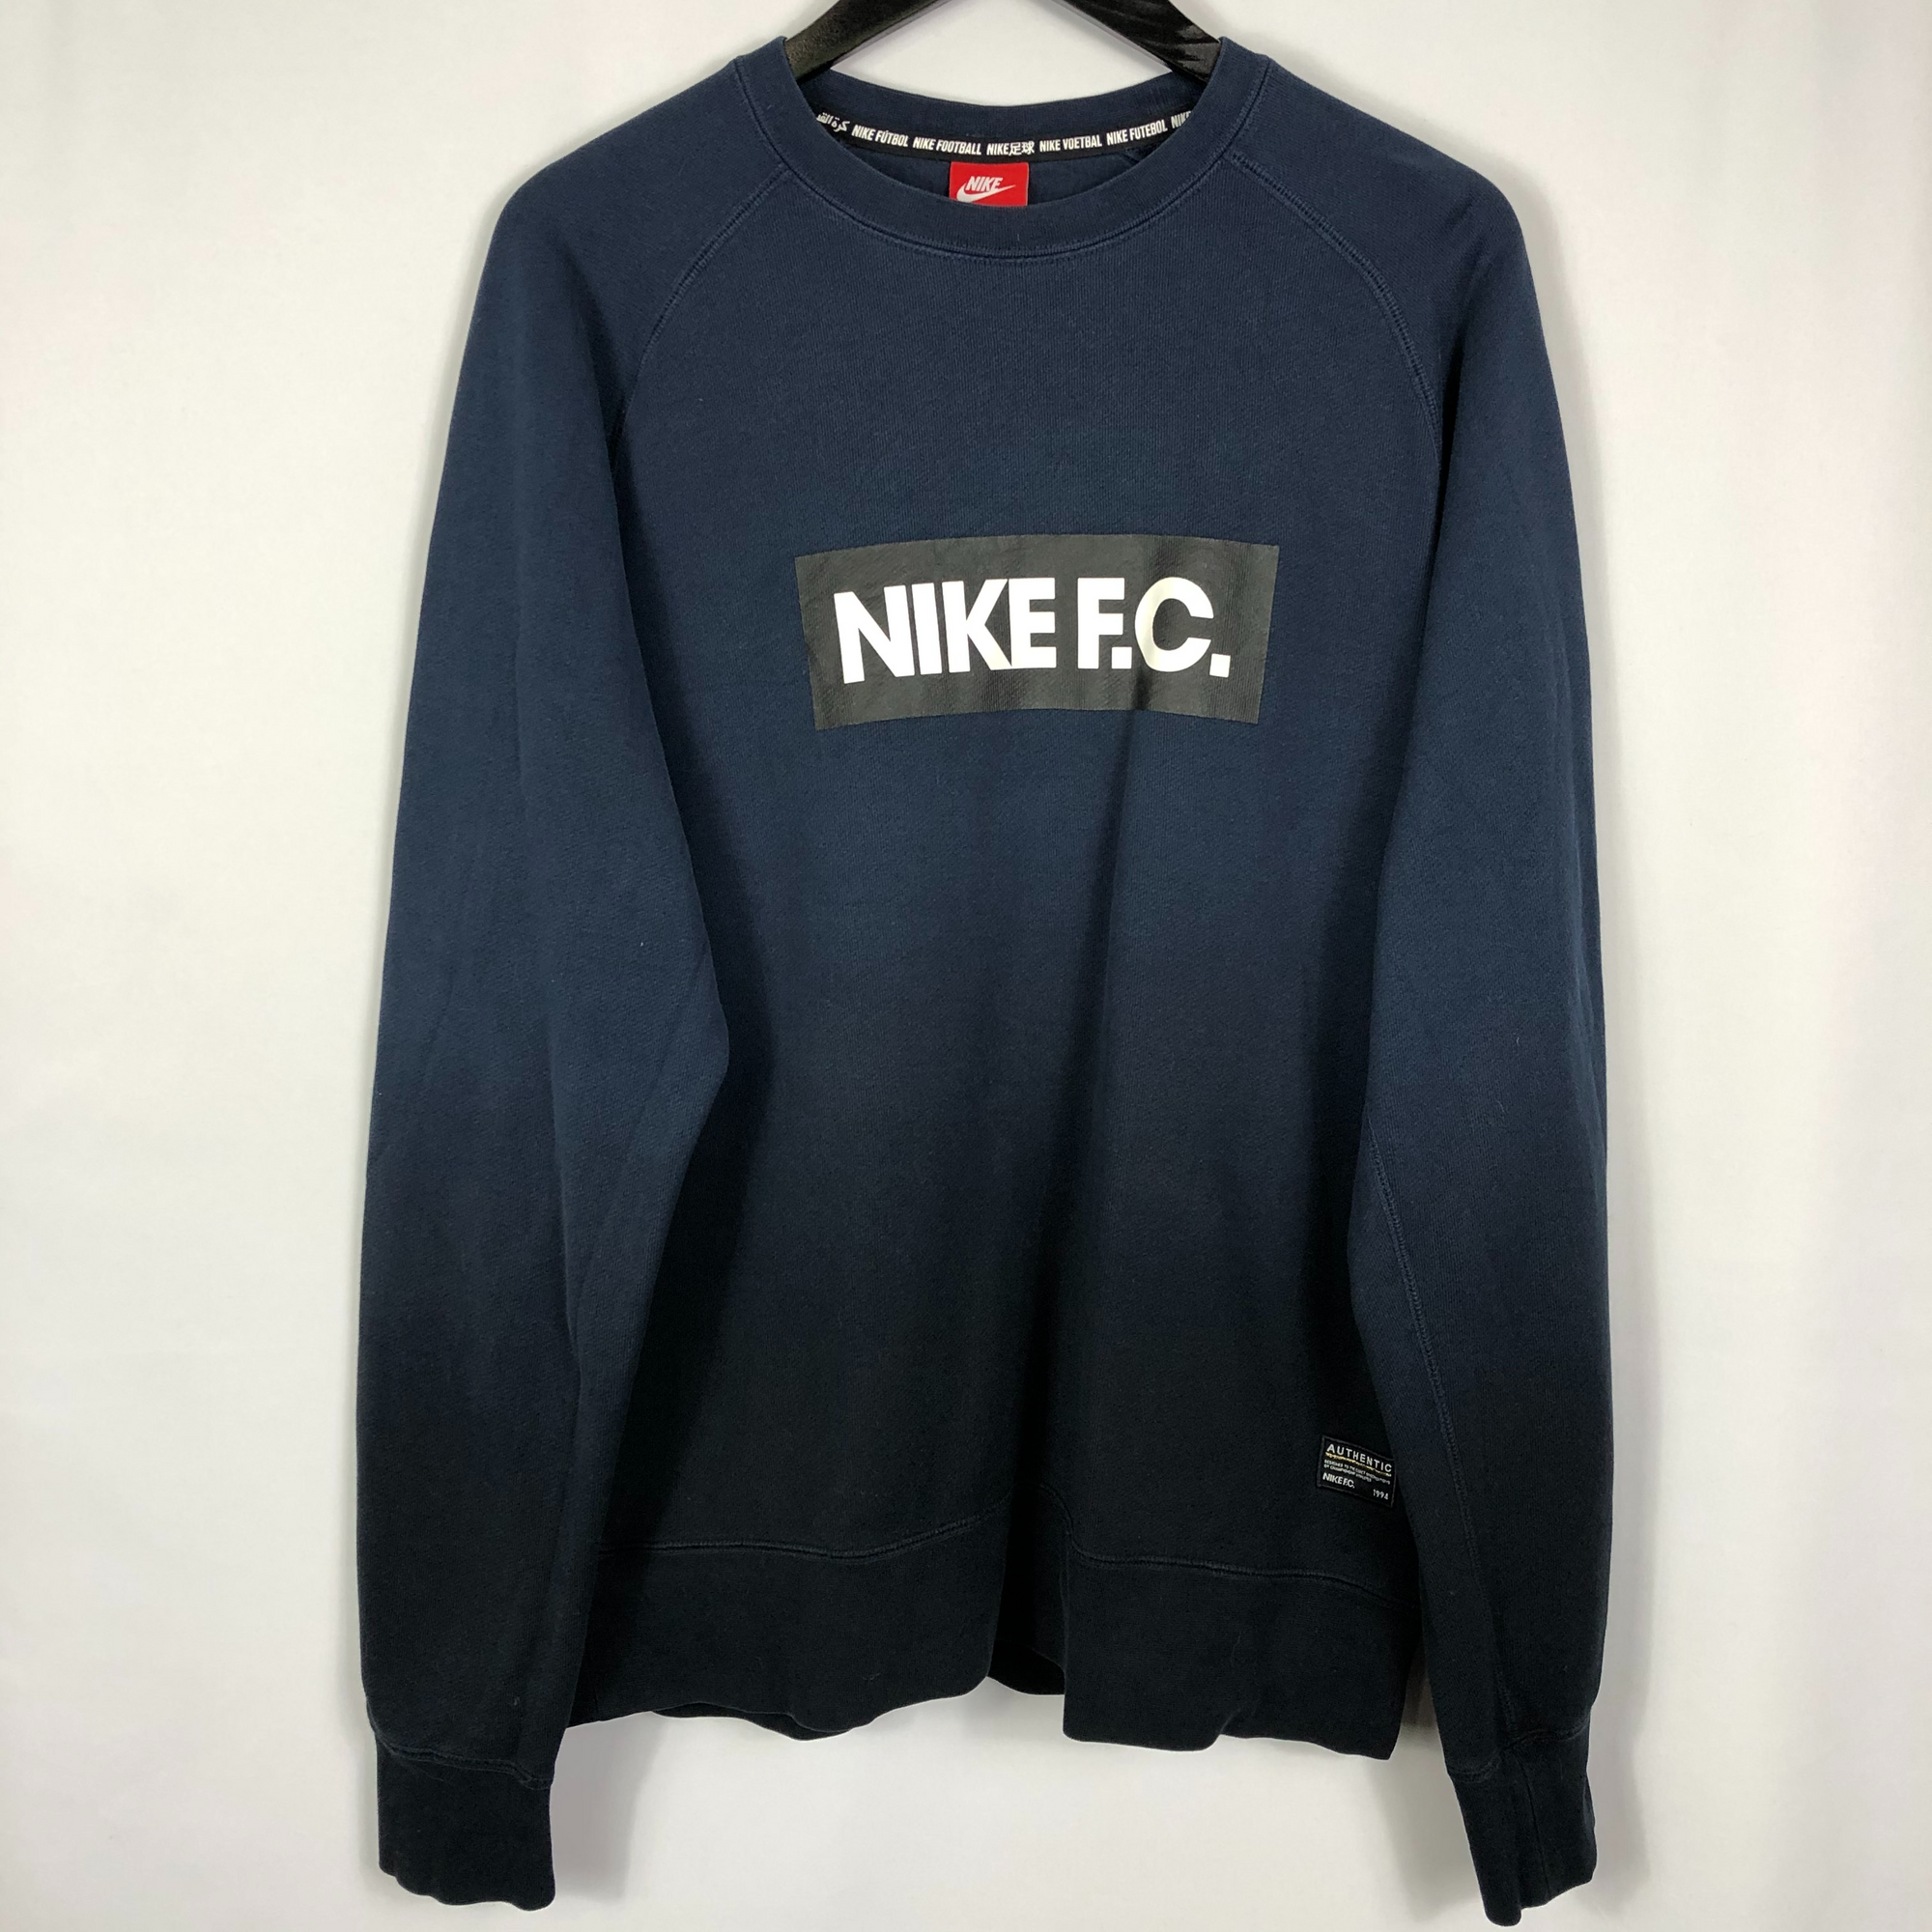 Nike F.C. Block Spellout Sweatshirt in Navy - Men's Large/Women's XL